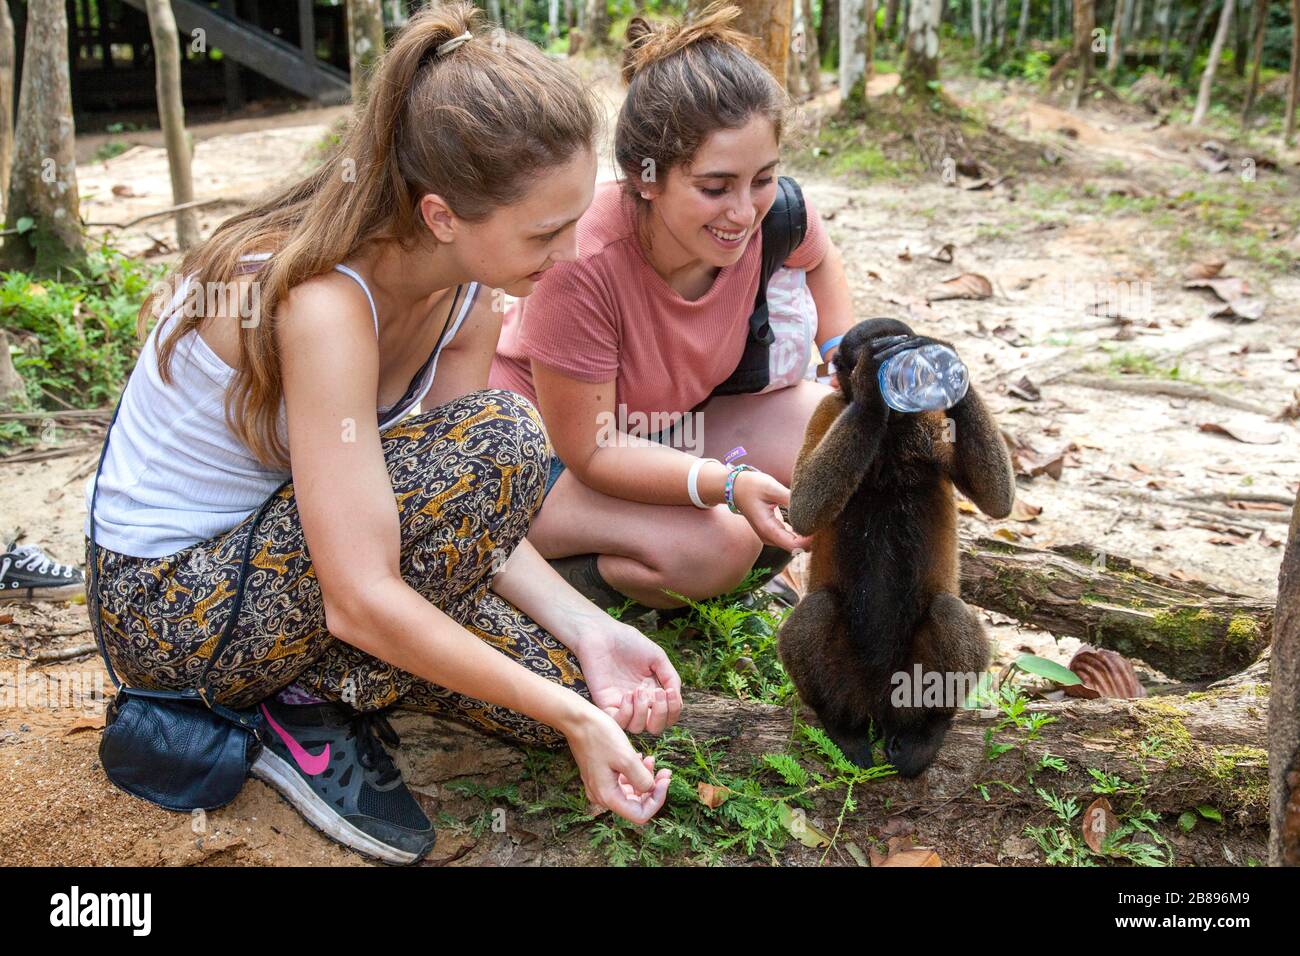 Tourist group and monkey Maikuchiga Foundation, Monkey sanctuary in Loreto Mocagua in the Amazon Rain Forest, Leticia Amazon, Colombia. South America. Stock Photo